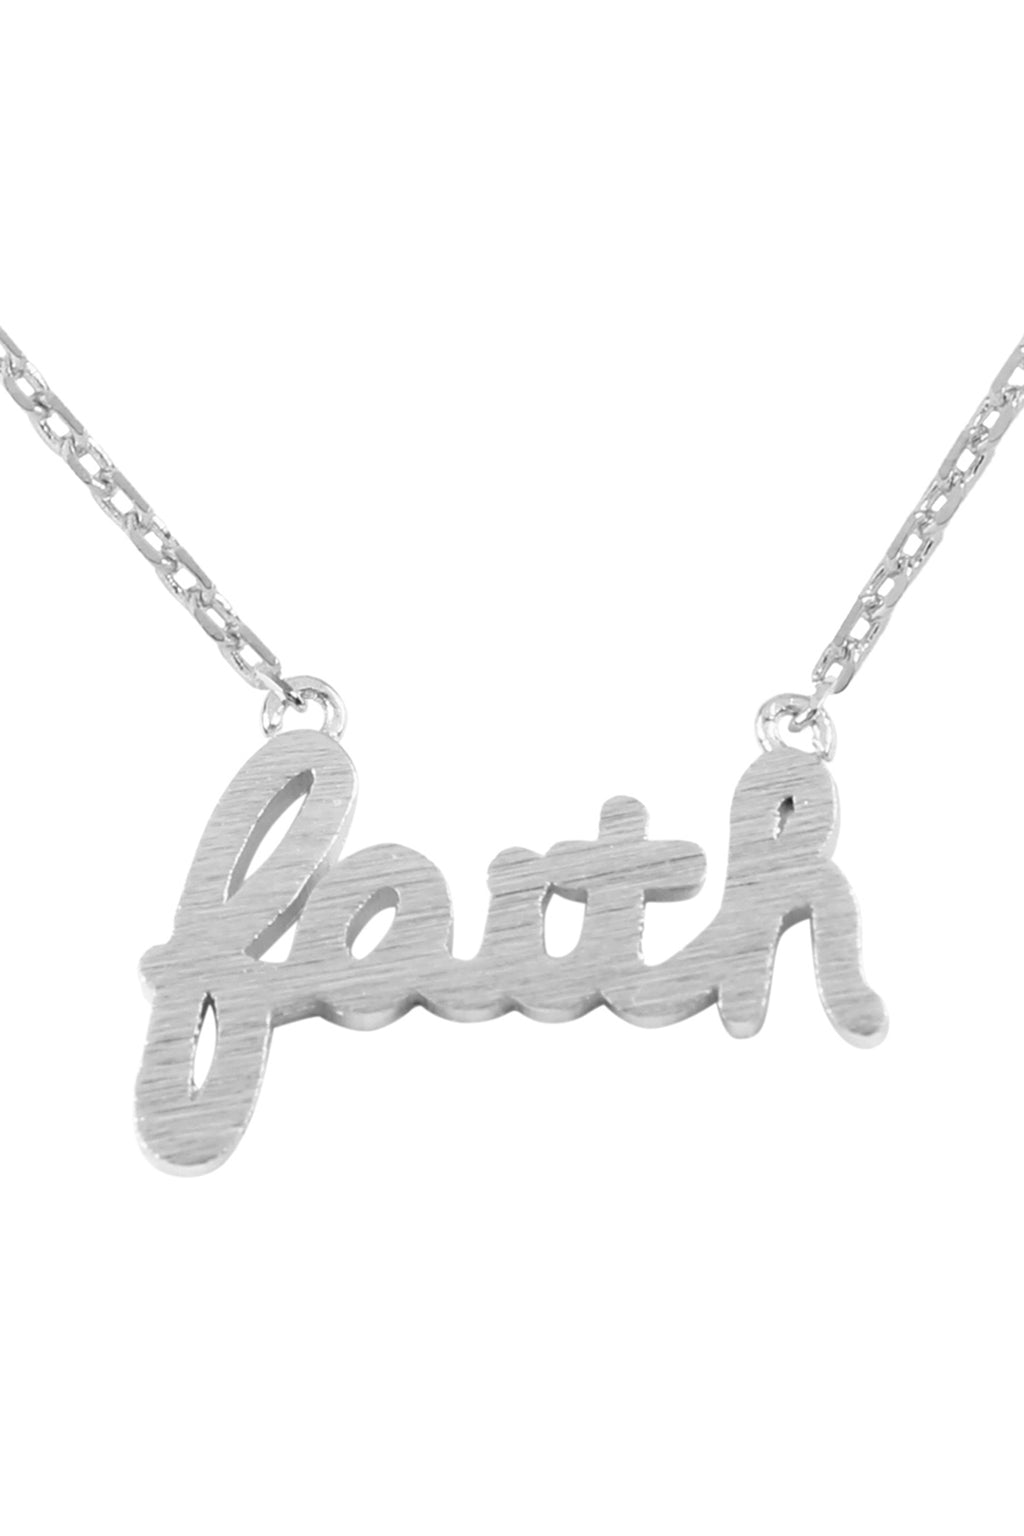 Faith Cast Pendant Necklace Silver - Pack of 6